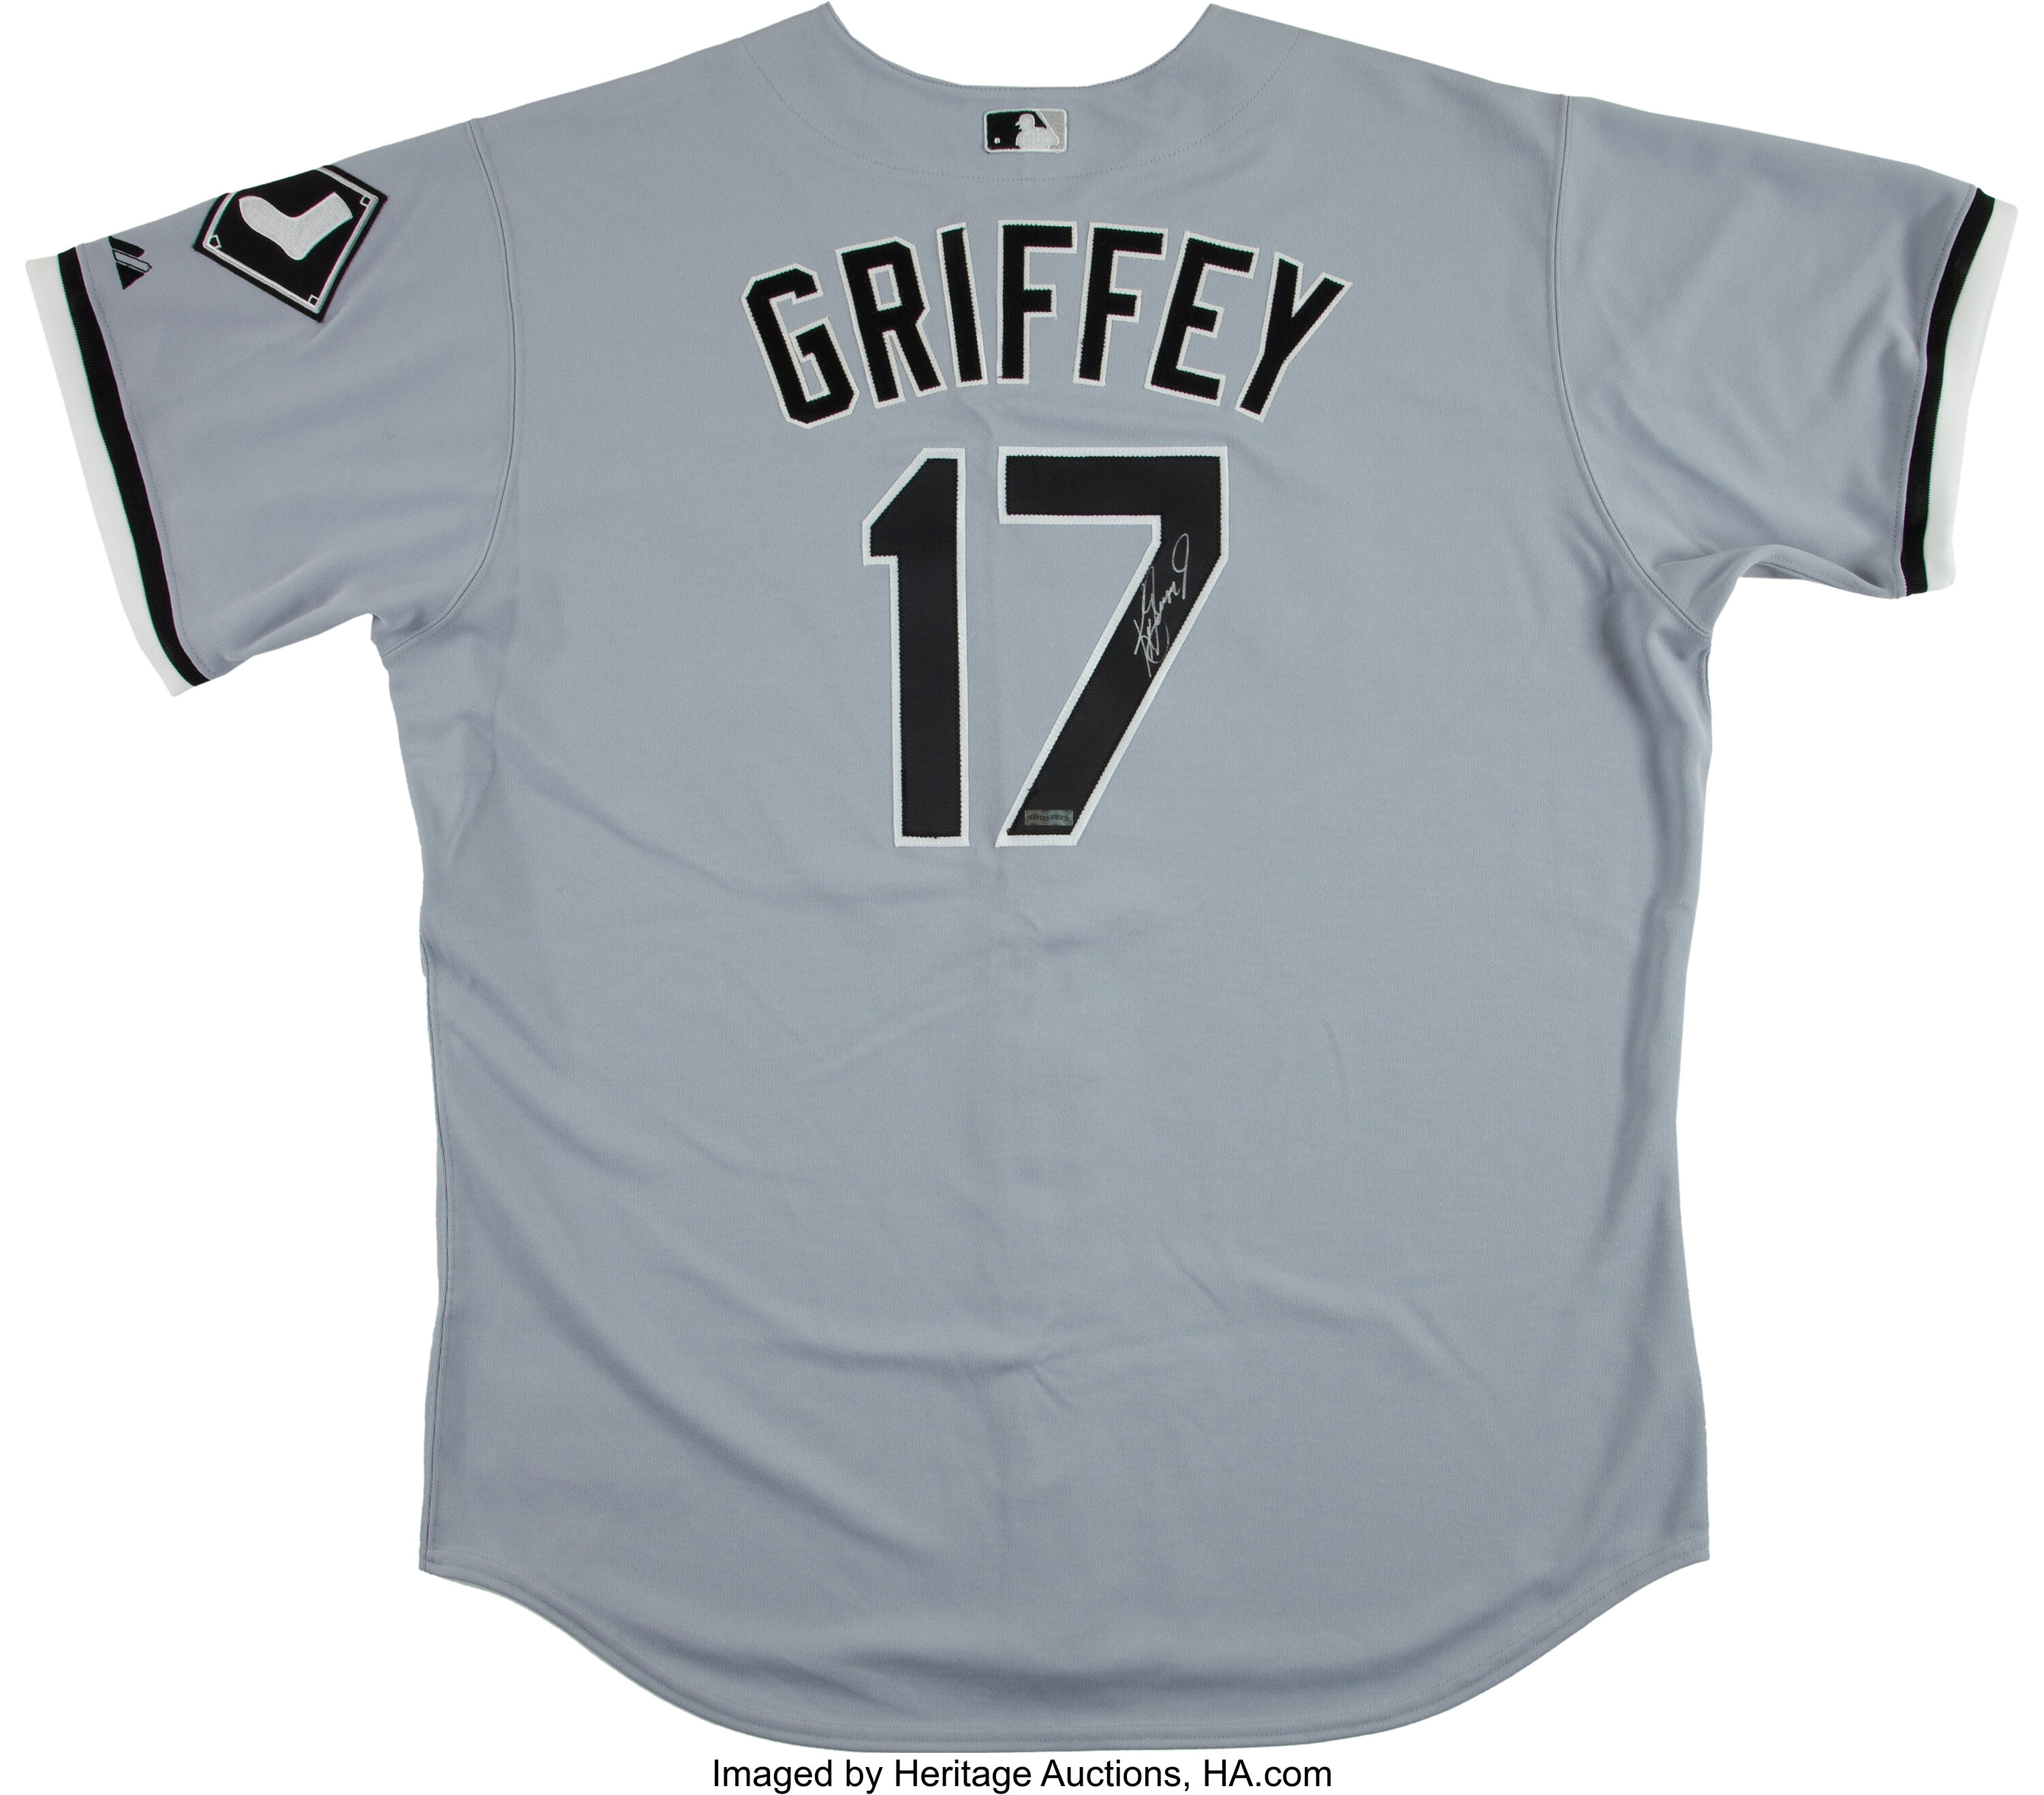 Ken Griffey Jr. Signed Chicago White Sox Jersey - Upper Deck, Lot #42061